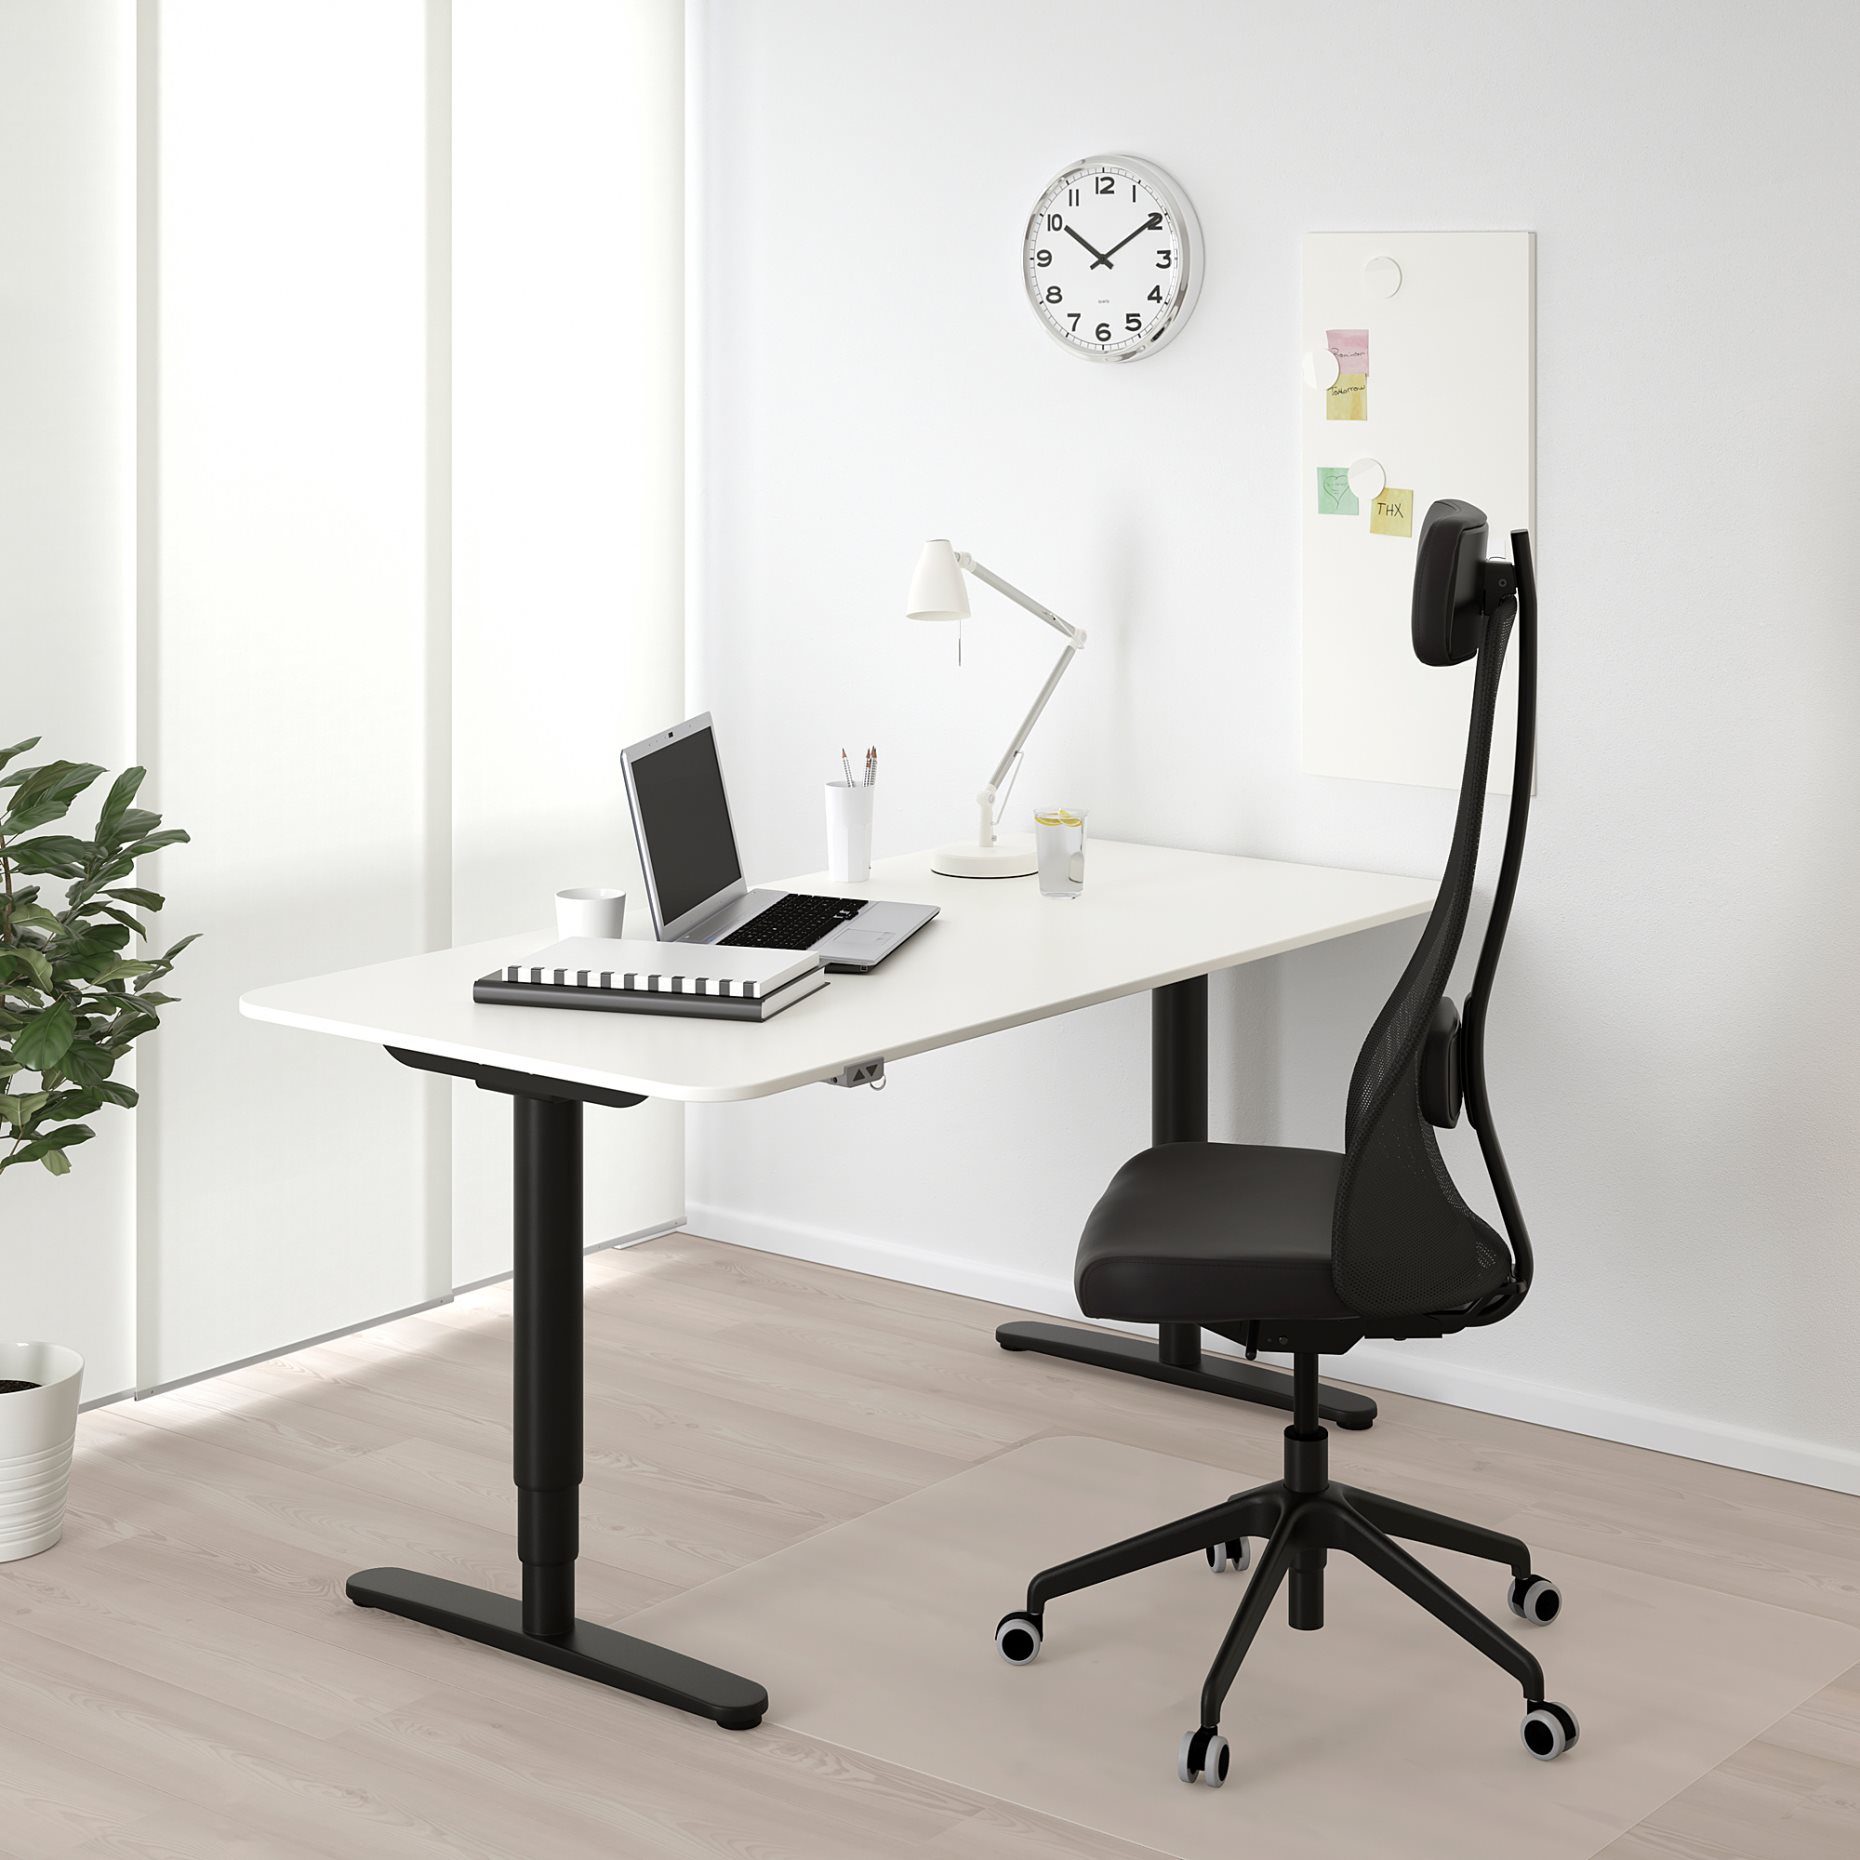 BEKANT, γραφείο καθιστής/όρθιας θέσης, 160x80 cm, 790.611.99